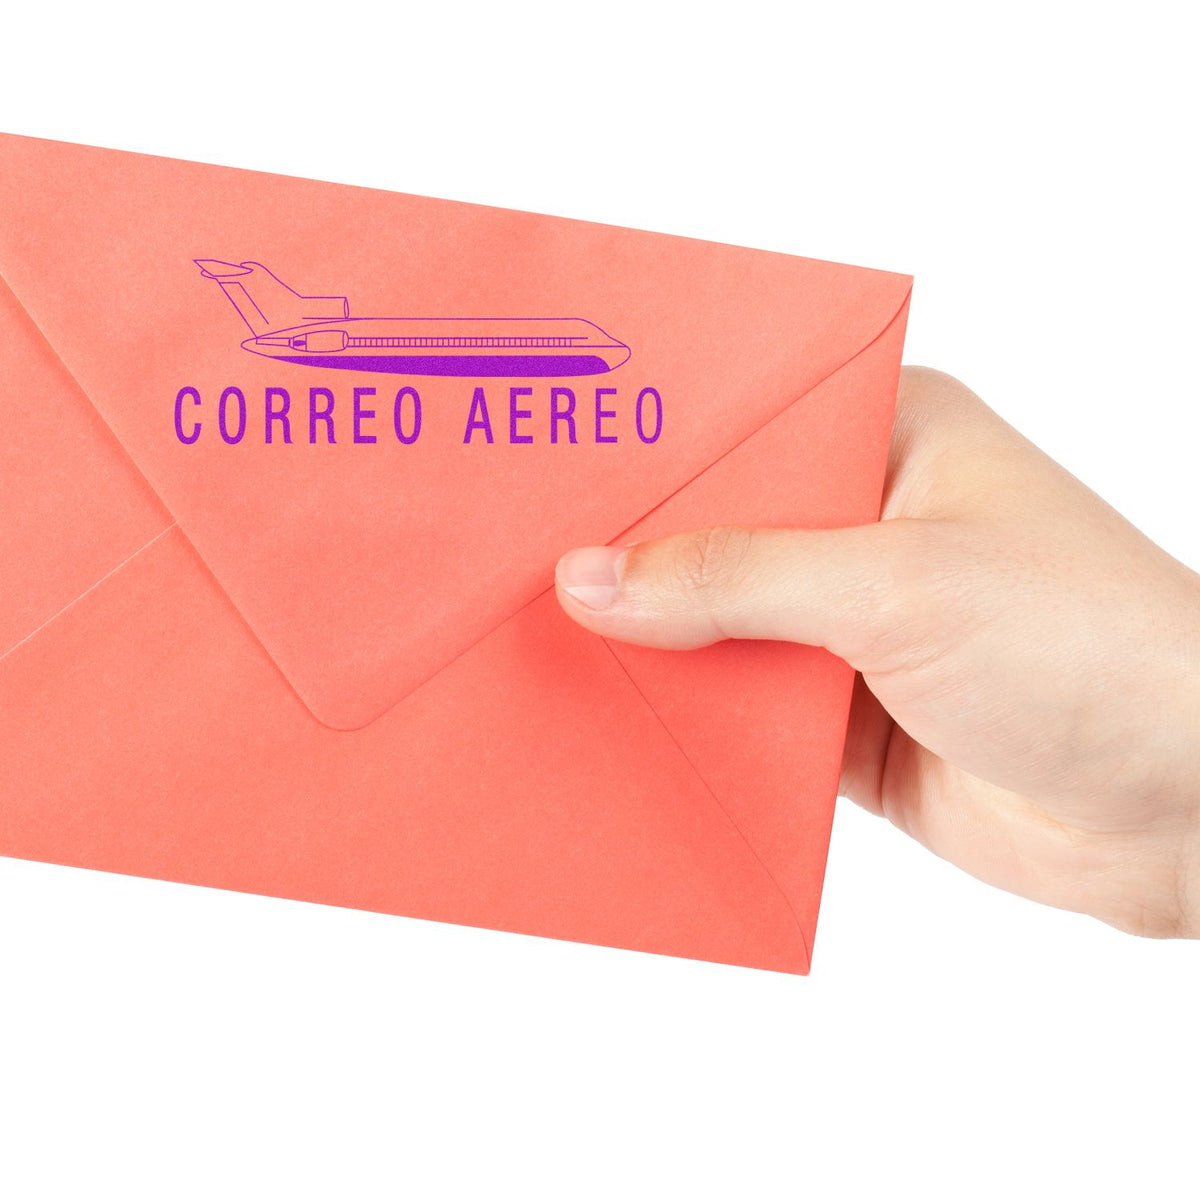 Slim Pre-Inked Correo Aero Stamp In Use